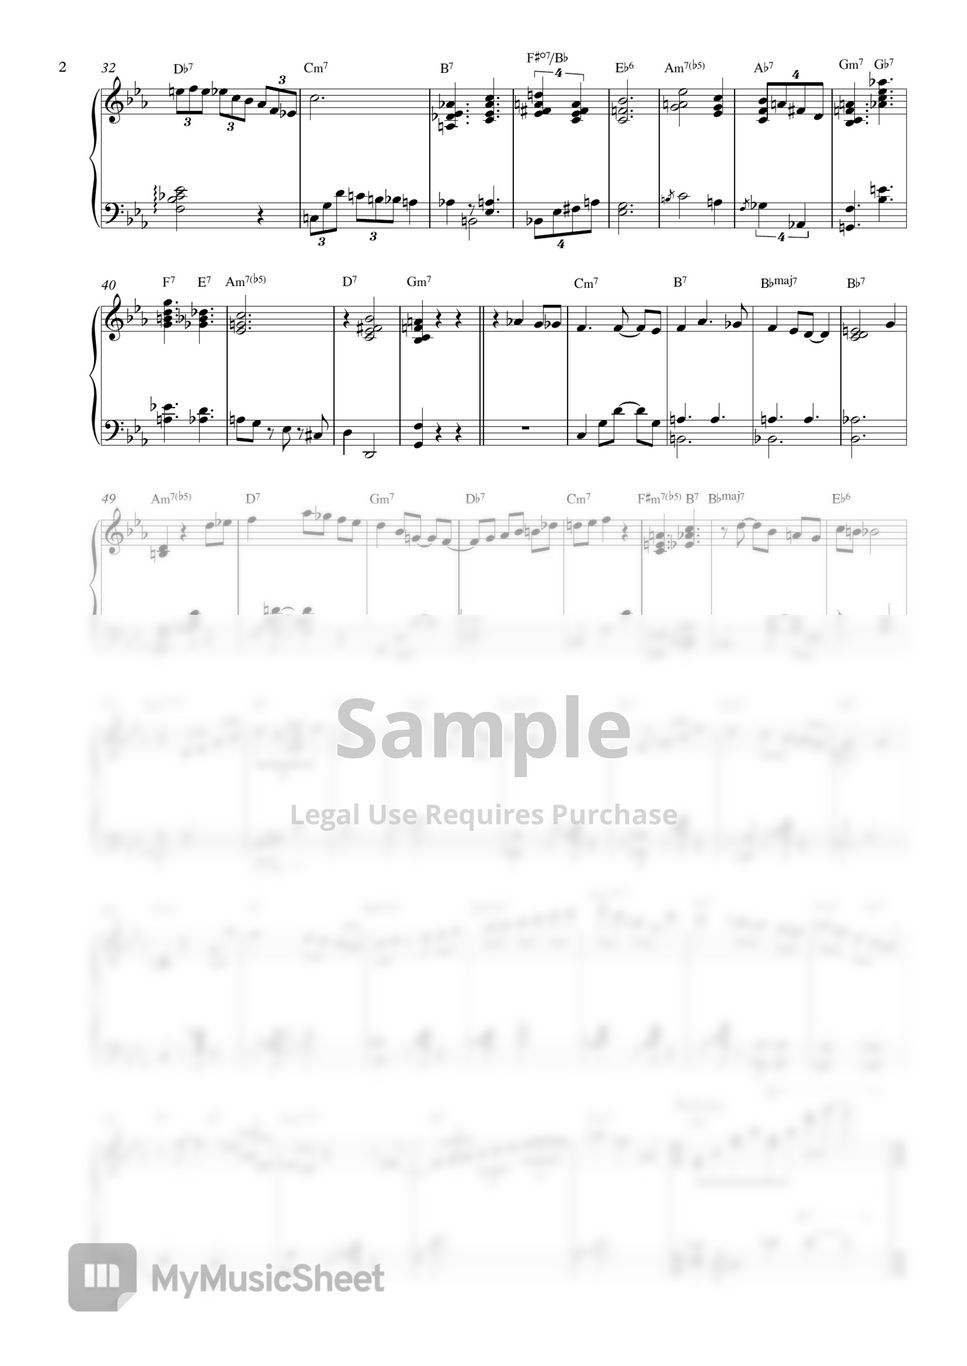 Joseph Kosma - Autumn Leaves (Solo Piano Ver.) by Acoustic Ballad